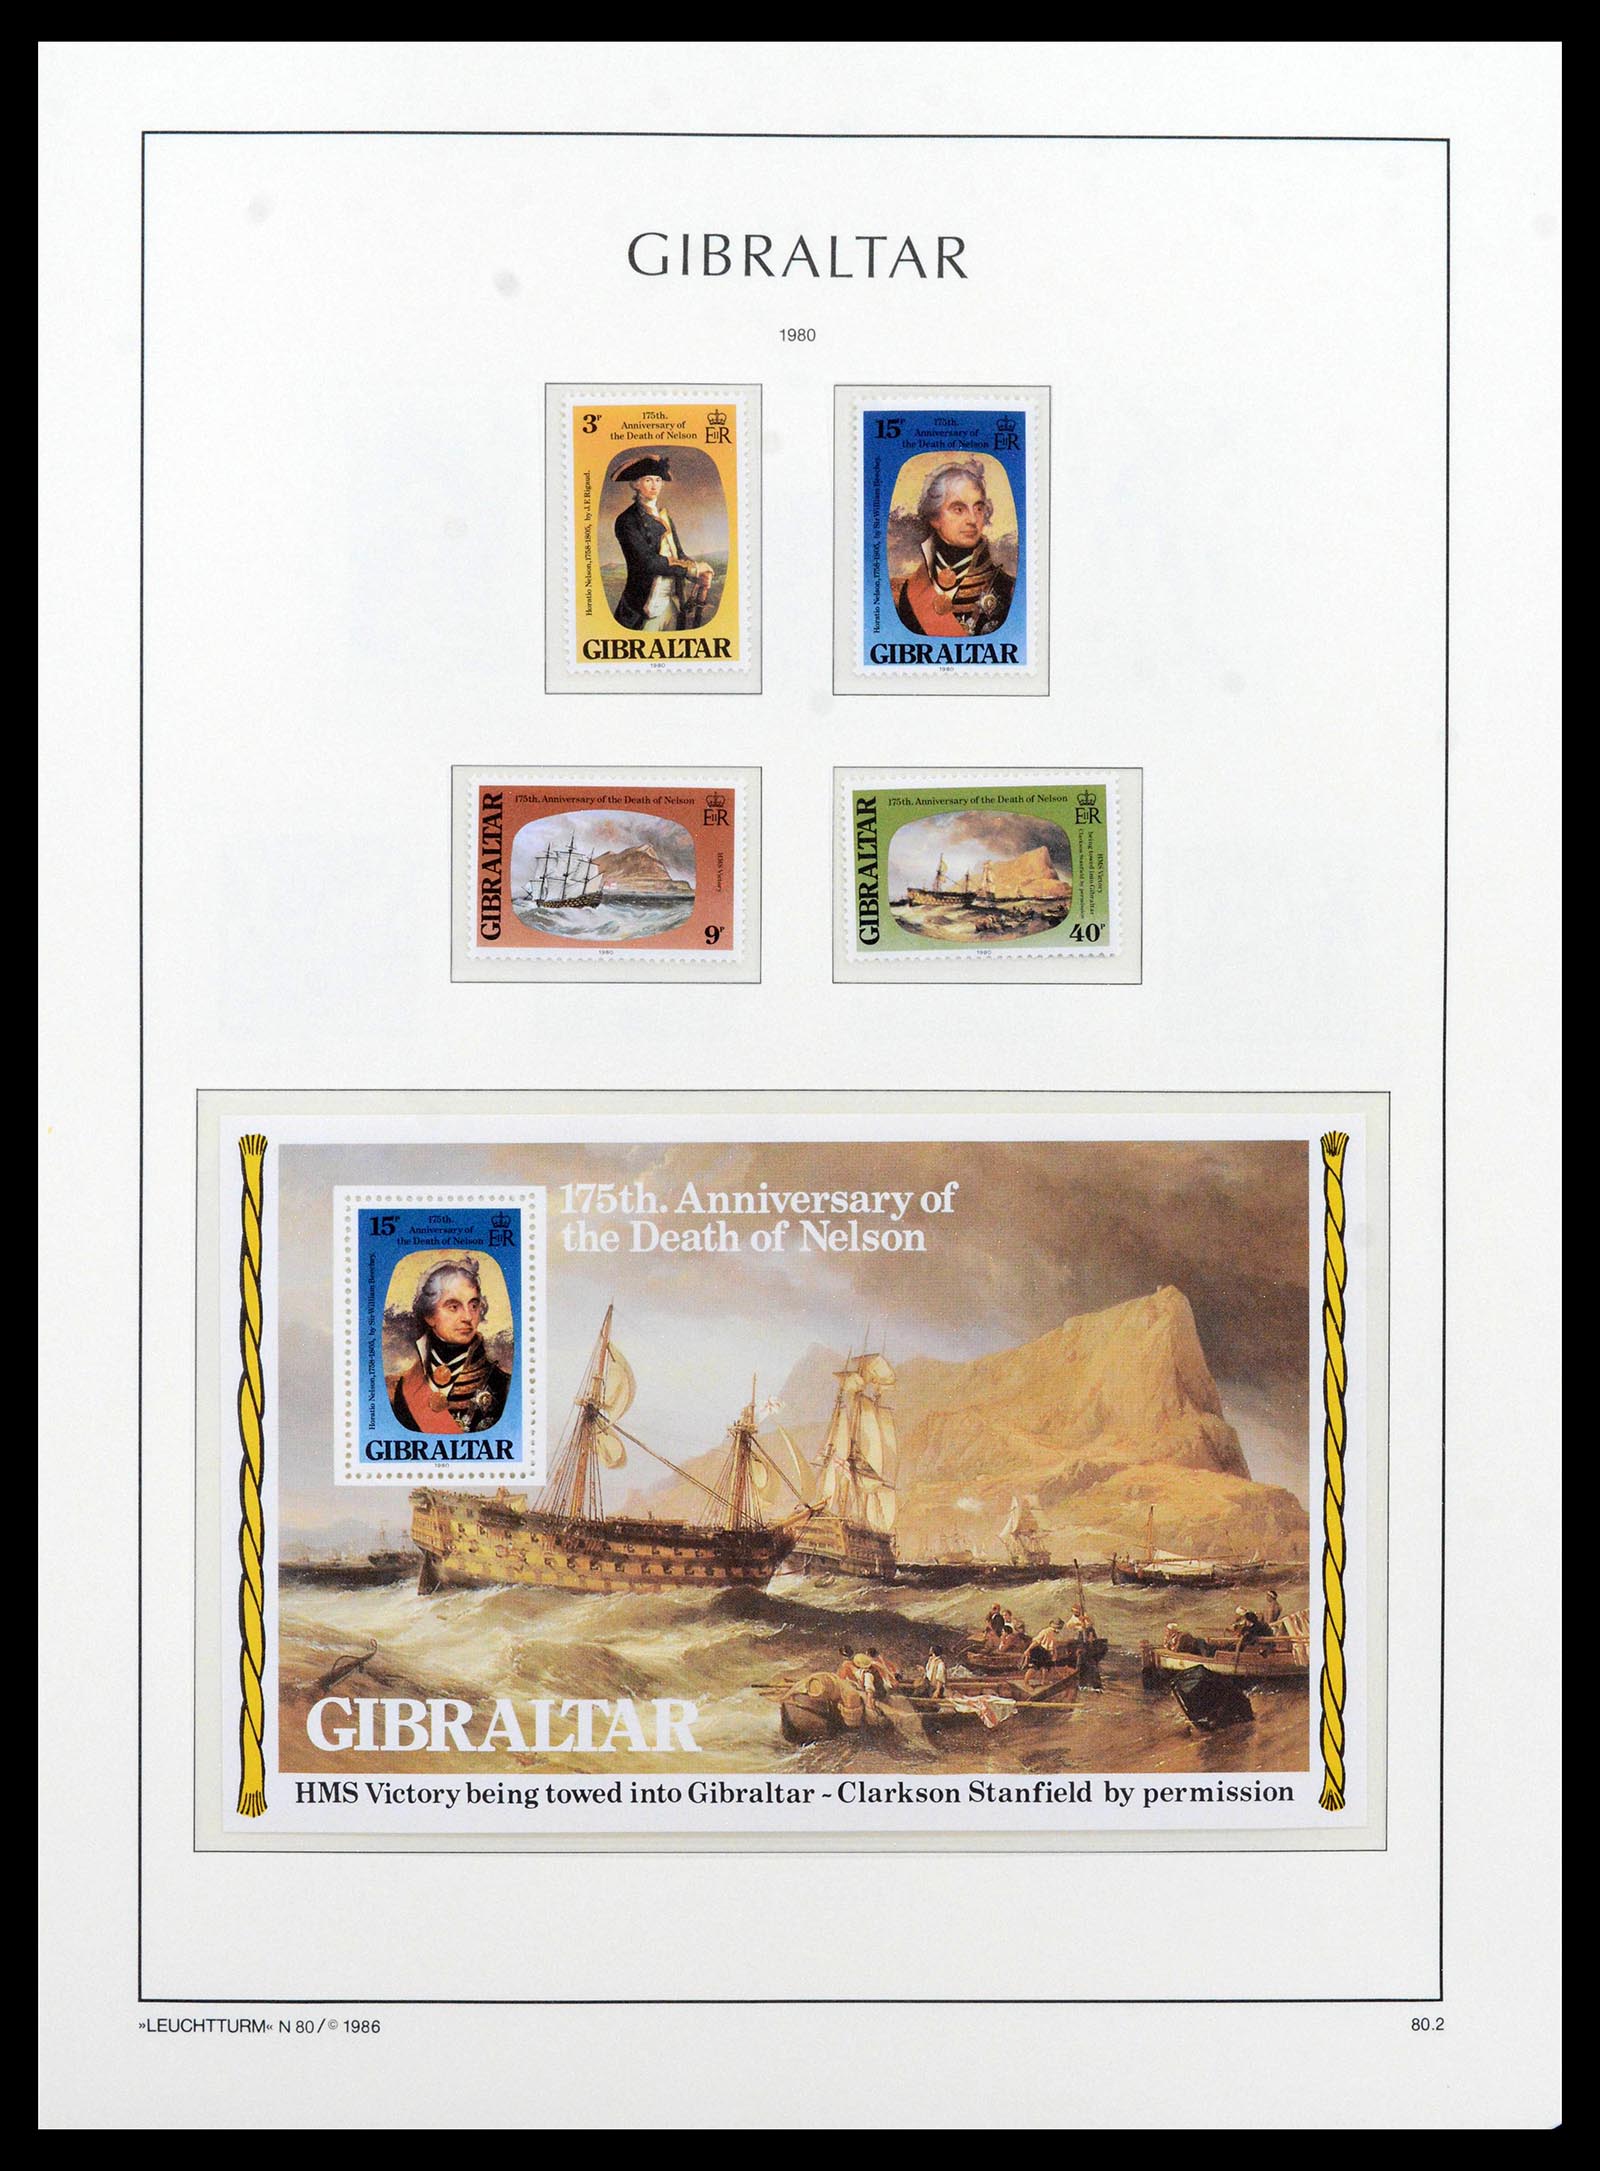 39158 0048 - Stamp collection 39158 Gibraltar 1886-2013.